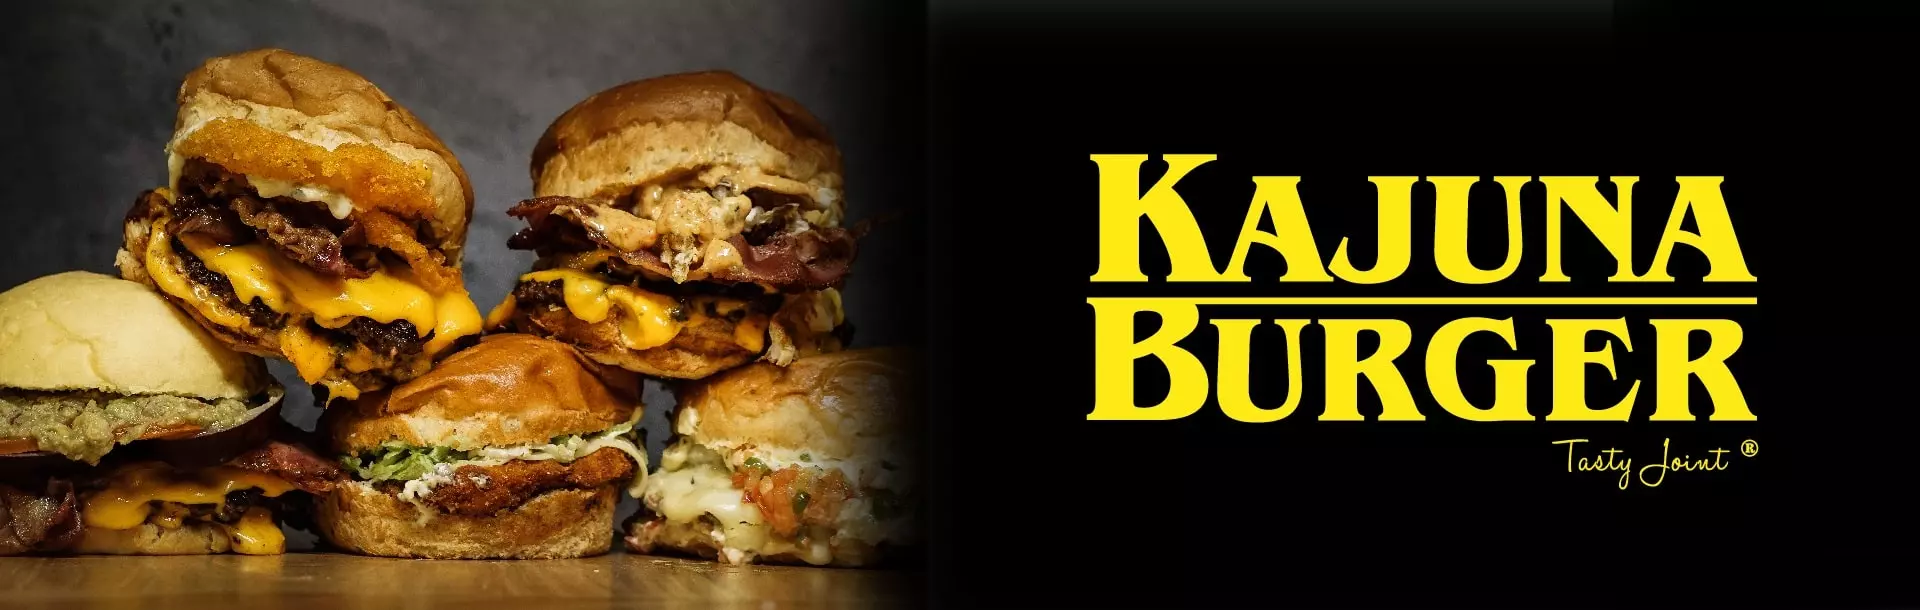 Franquicia Kajuna Burger